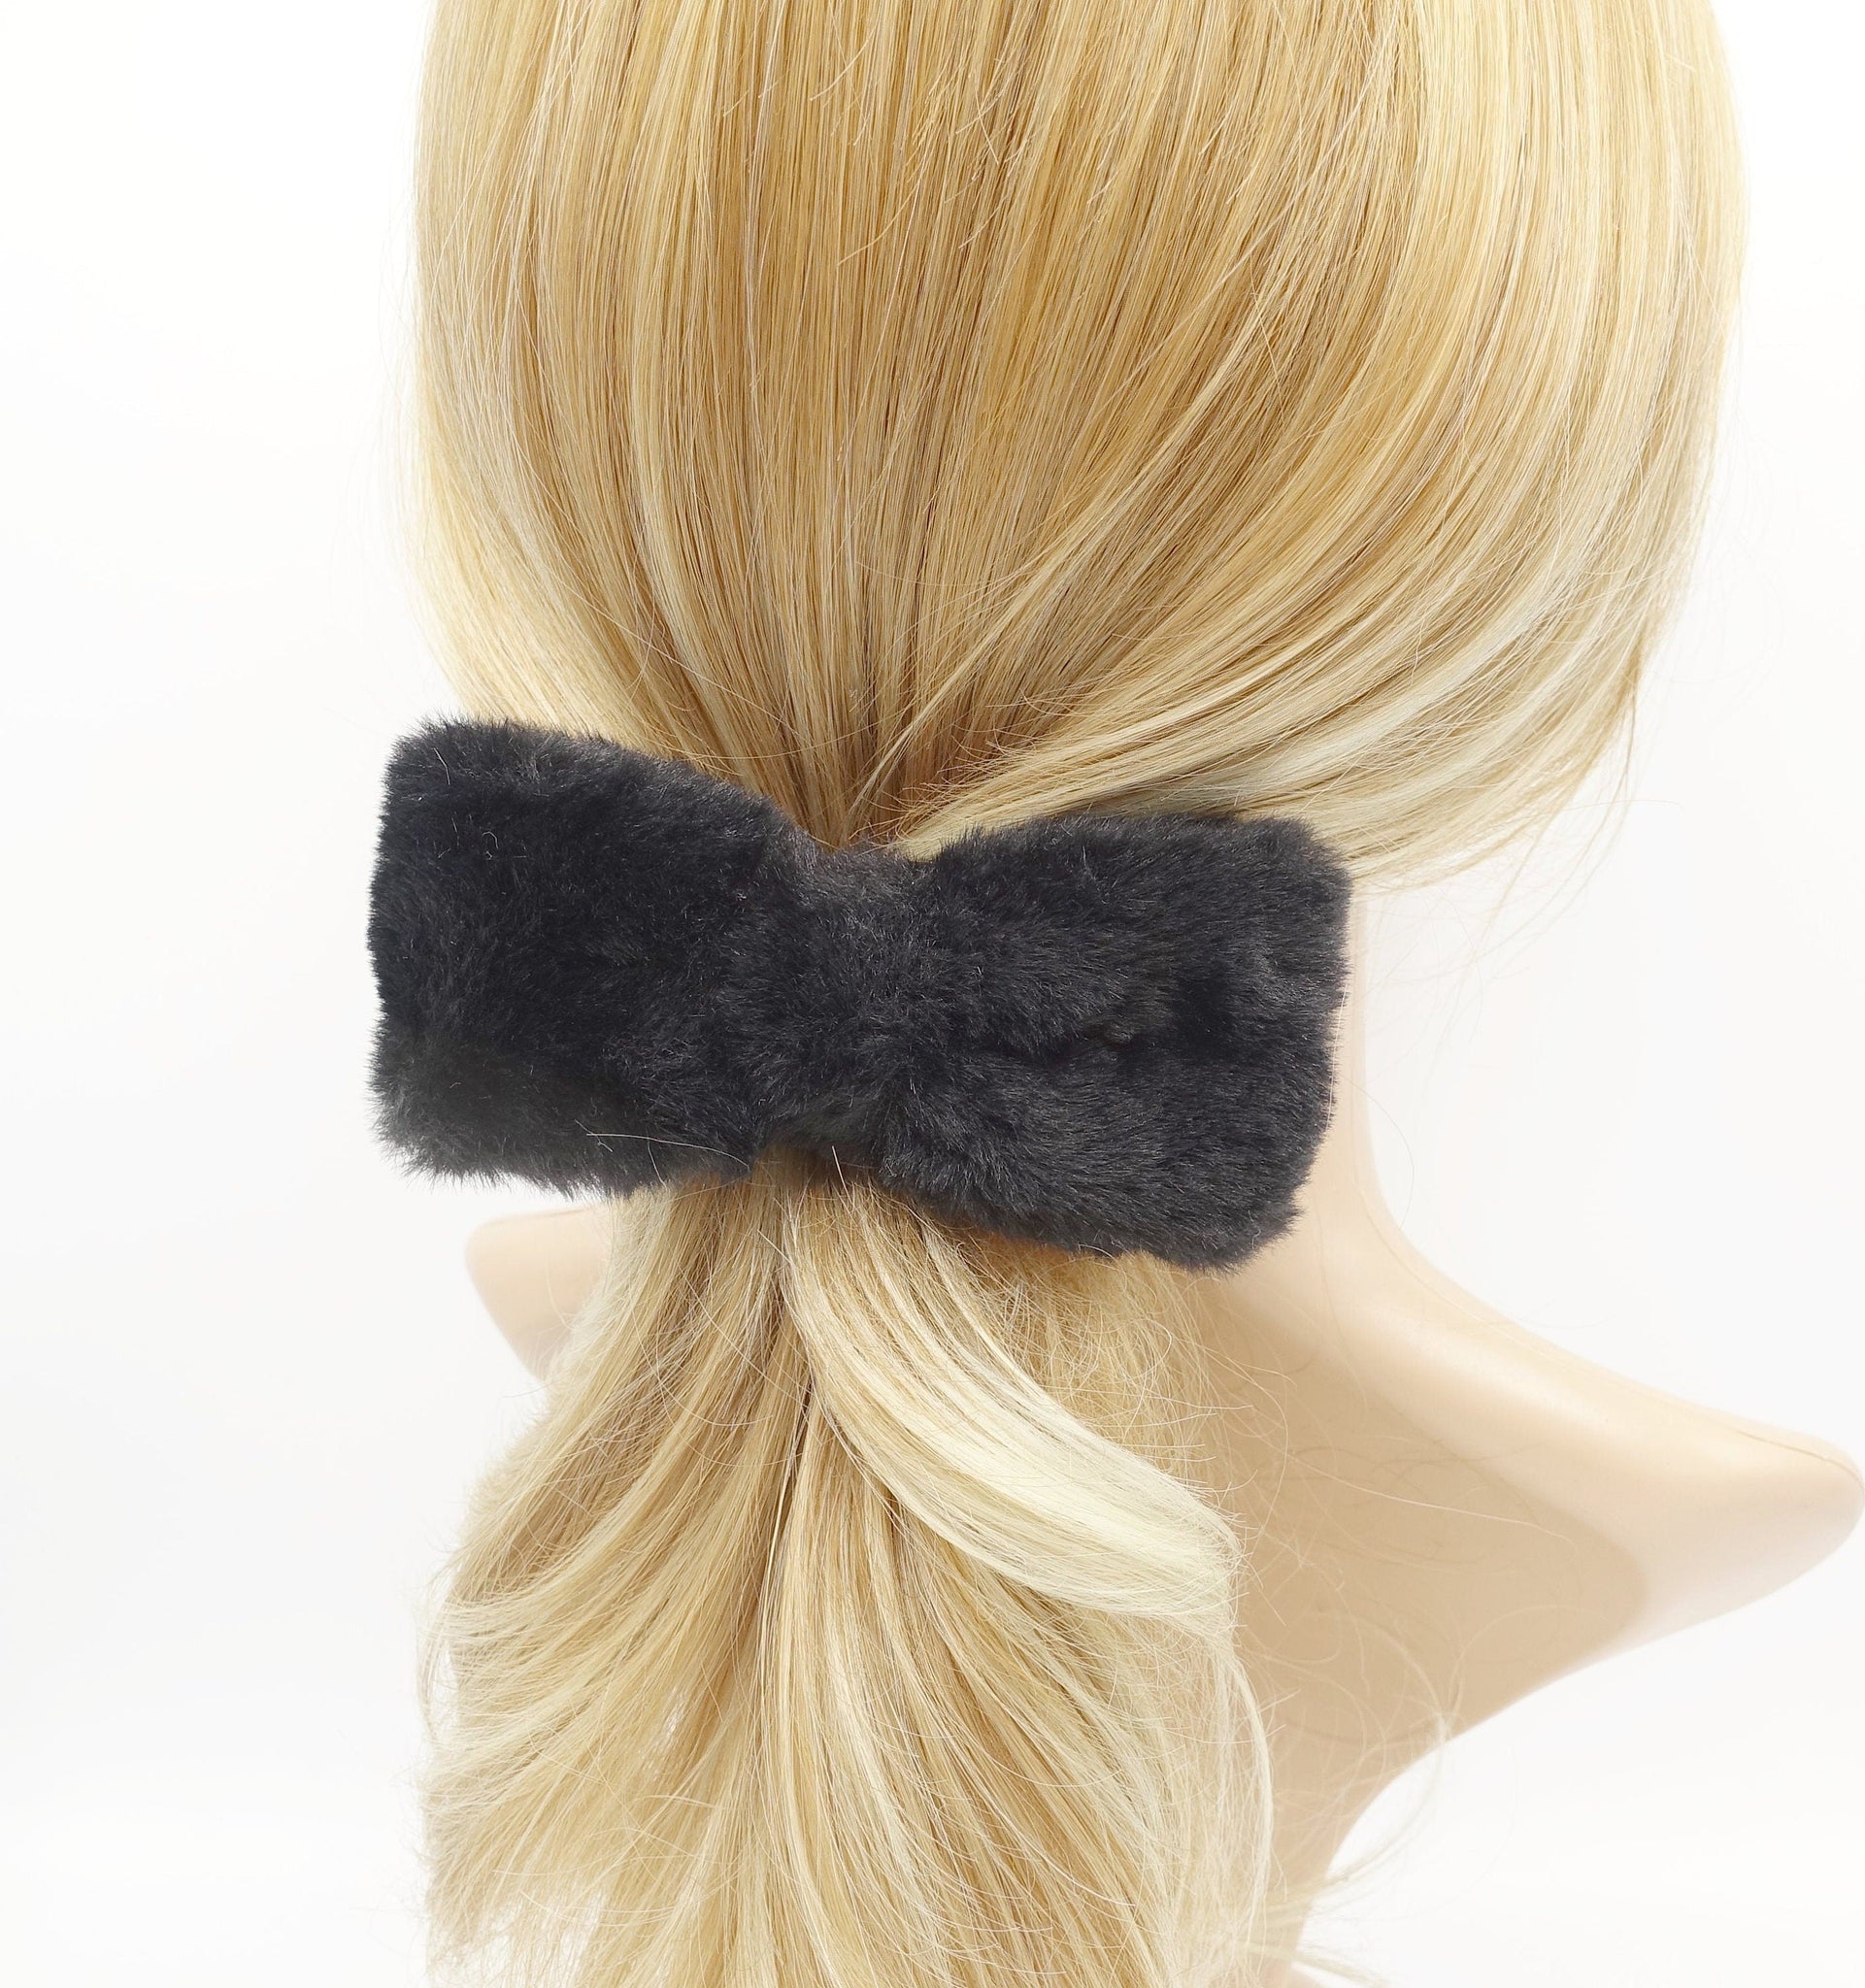 veryshine.com Barrette (Bow) Black fabric fur hair bow soft Winter hair accessory for women